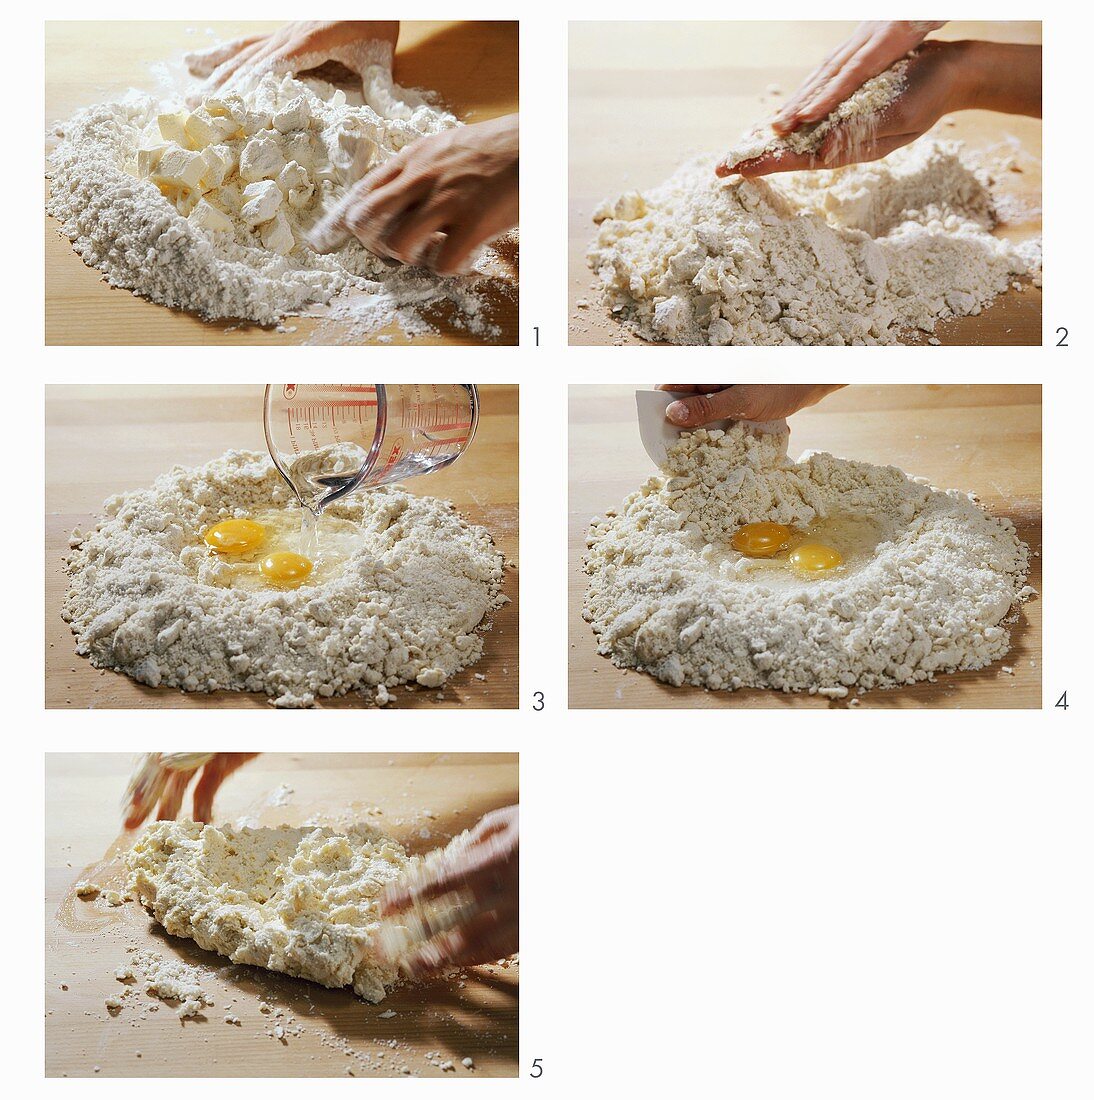 Making pastry (rubbing-in method)